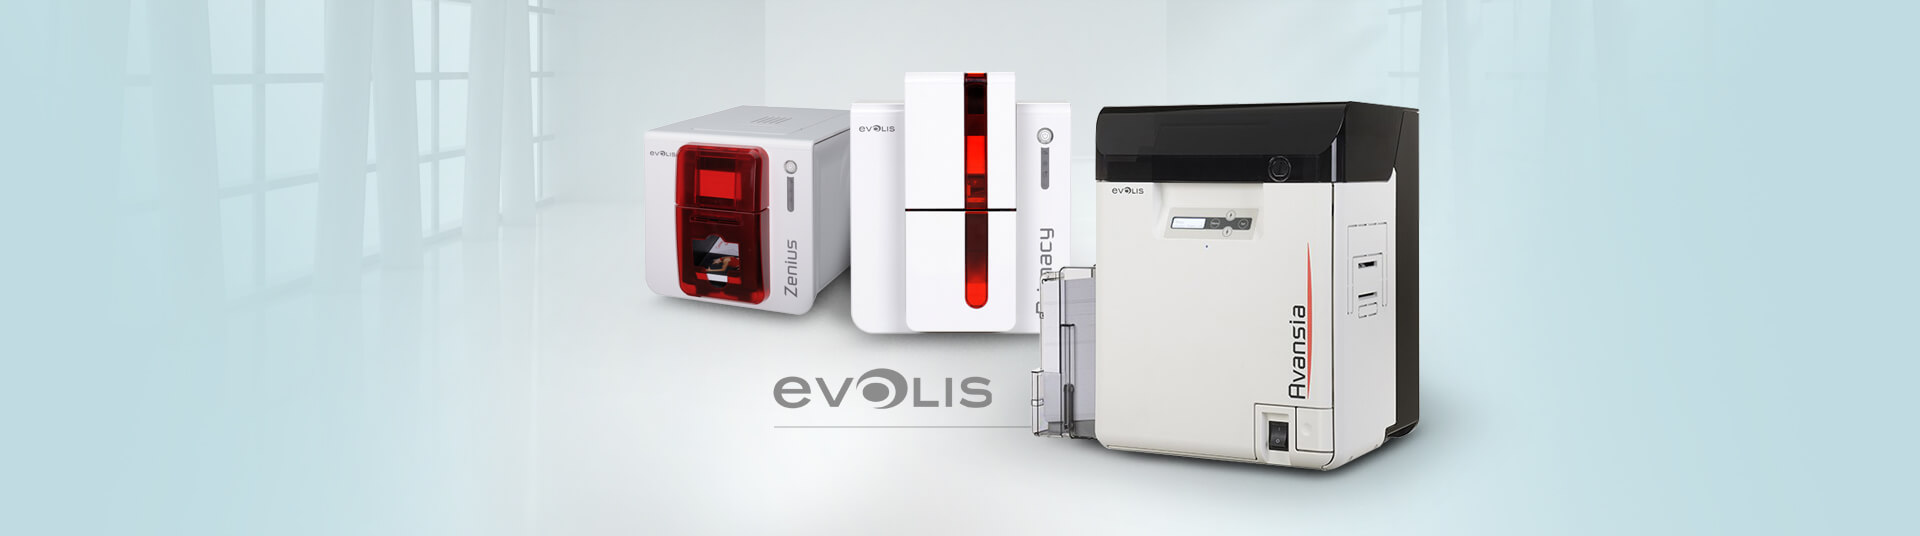 Evolis Photo ID Printers